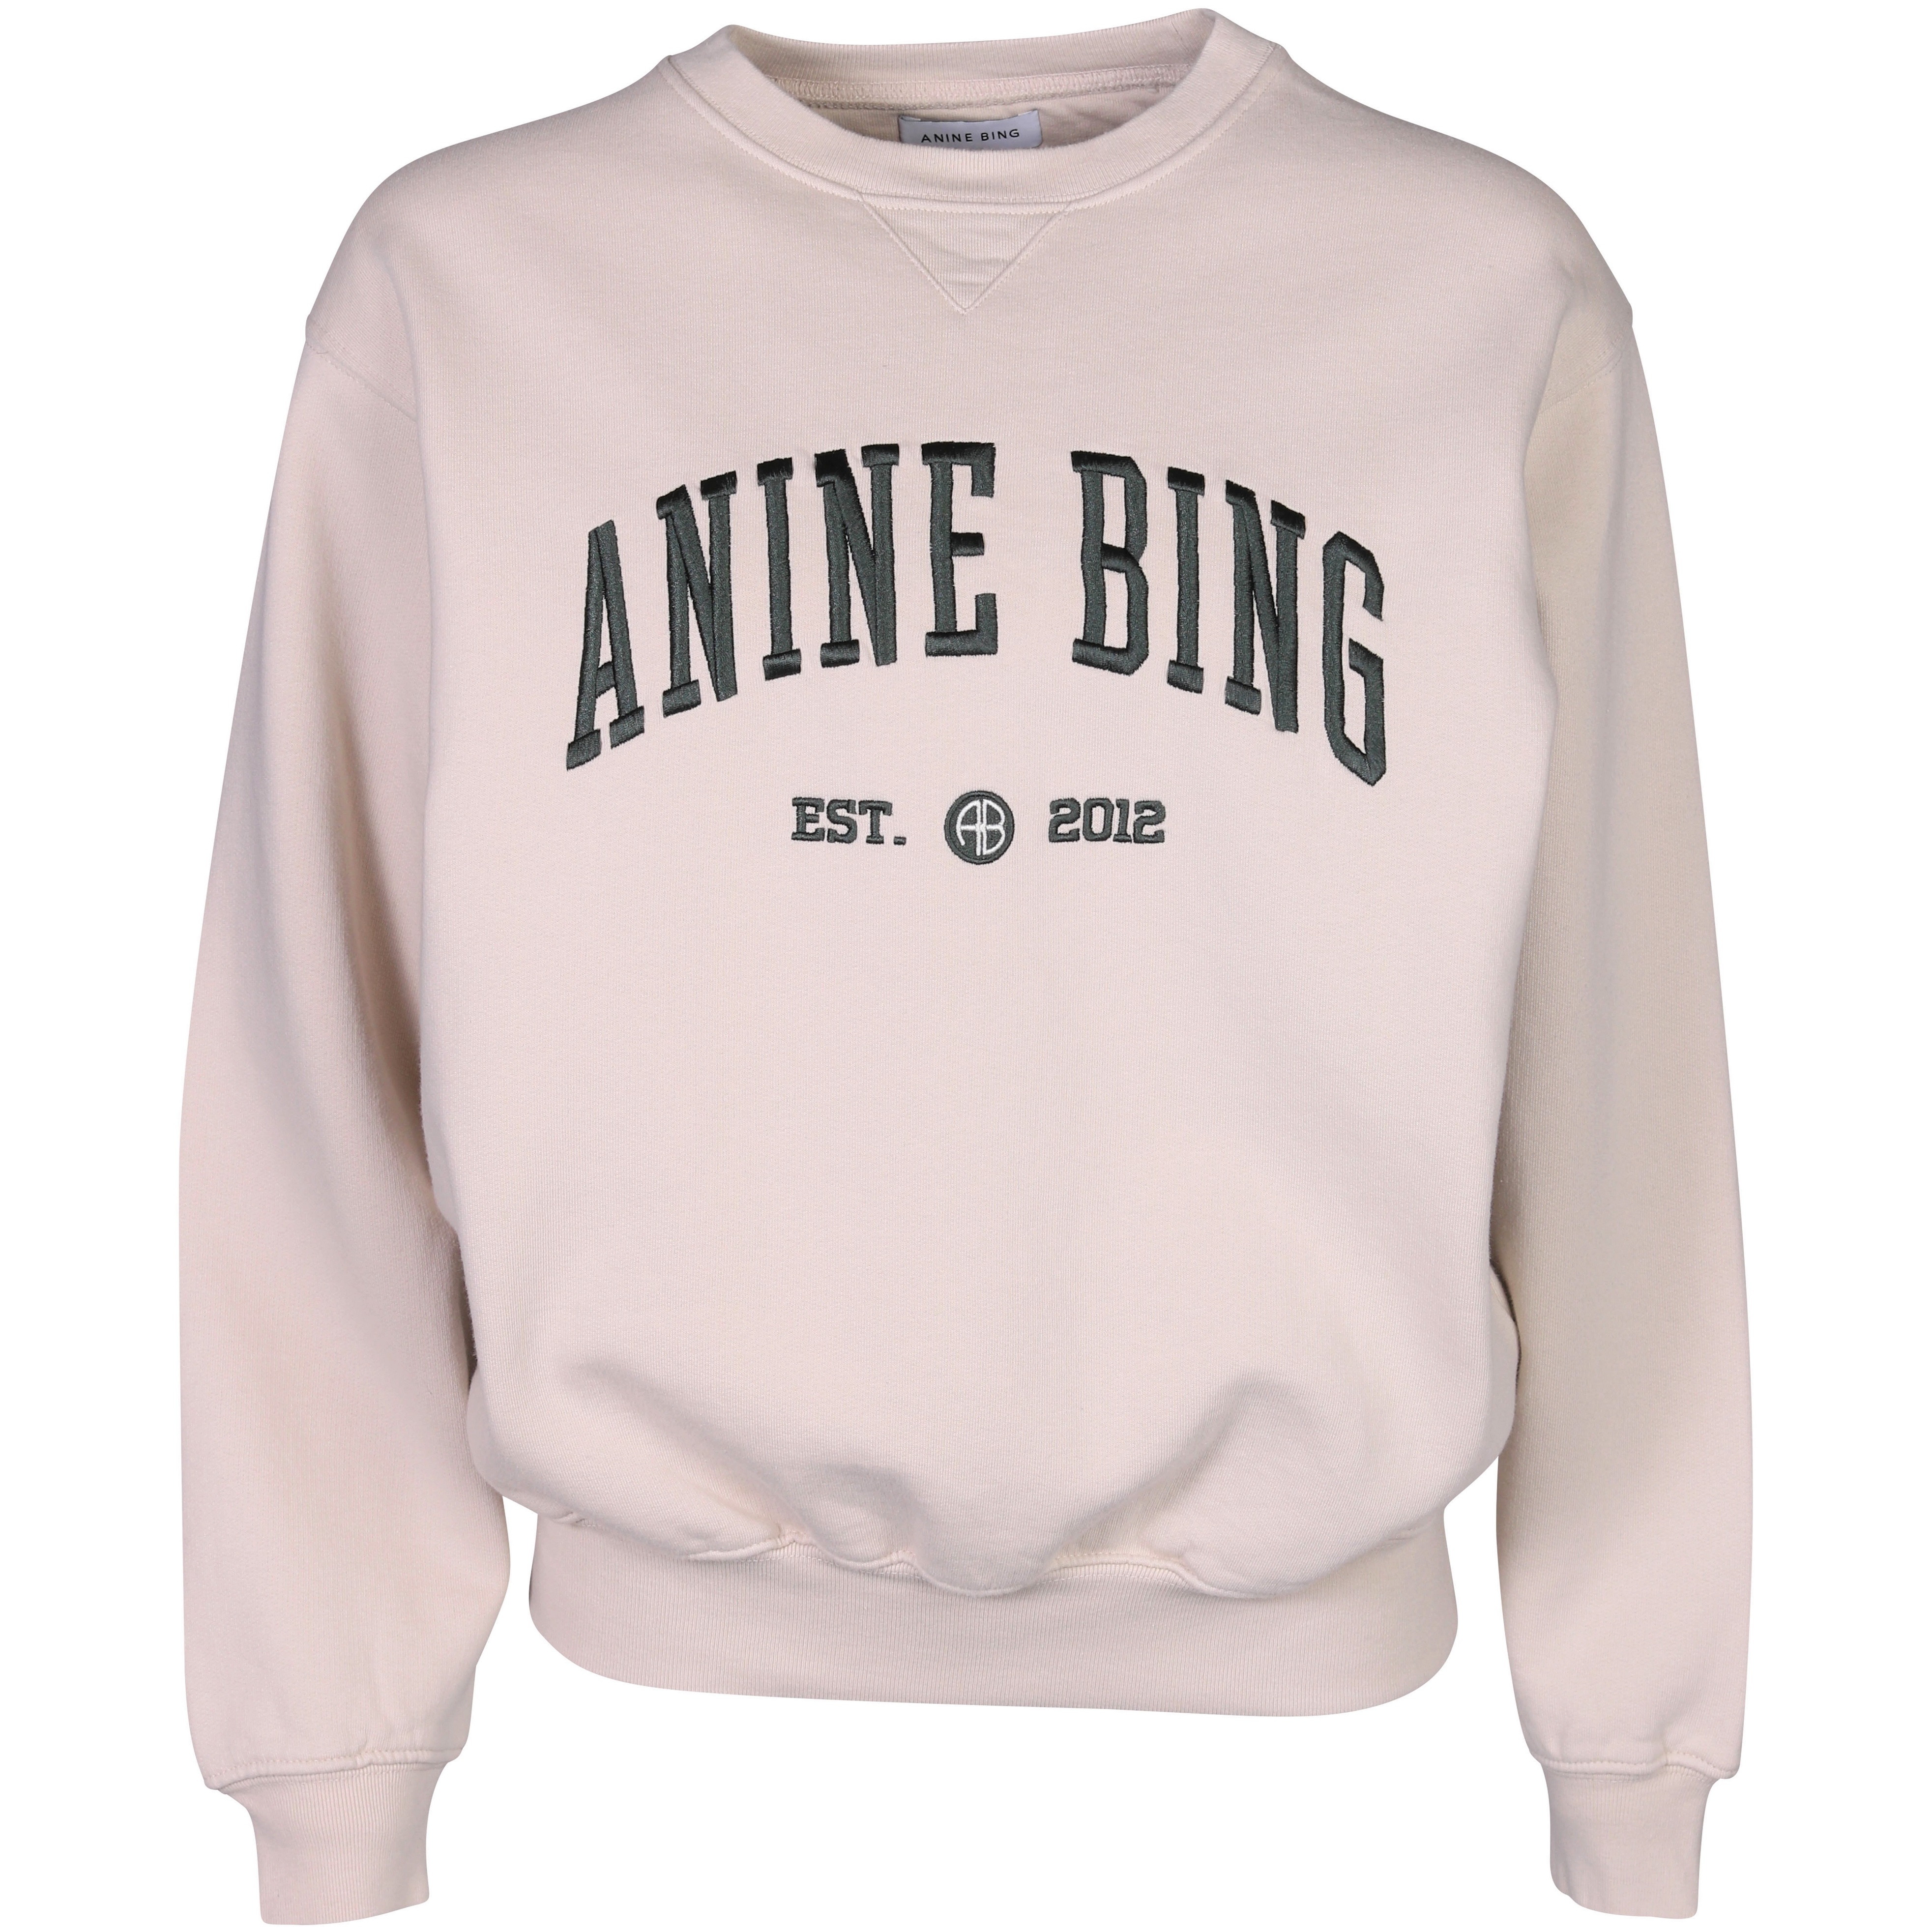 Anine Bing Ramona Sweatshirt University Anine Bing in Grey M